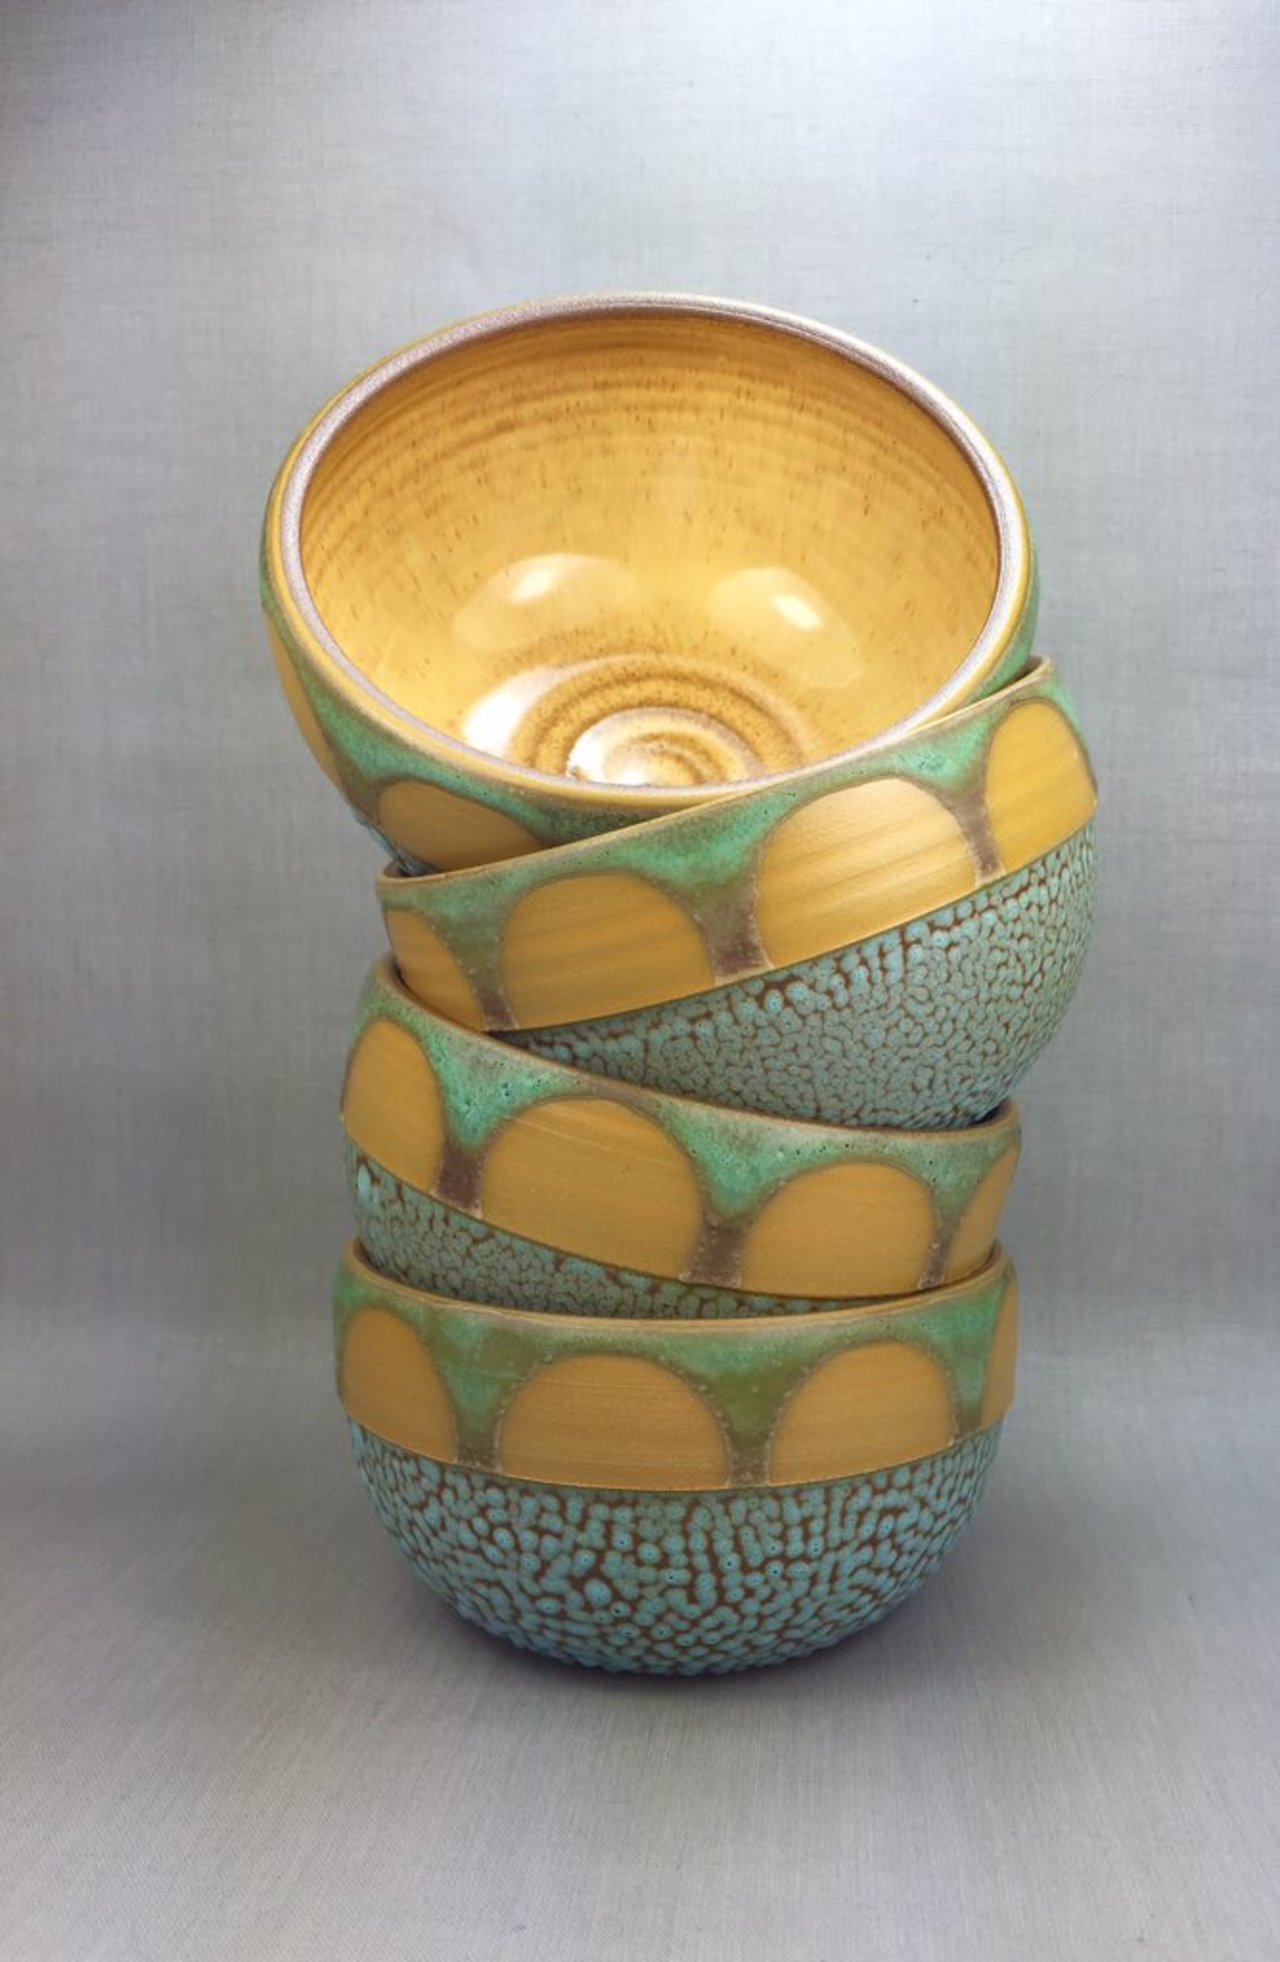 RT @handmadehere: Lisa McGrath will be bringing her gorgeous #ceramics to #HMHyyc Nov 21 & 22. #yyc #craft #handmade #shoplocal https://t.co/YLpqykhRrO